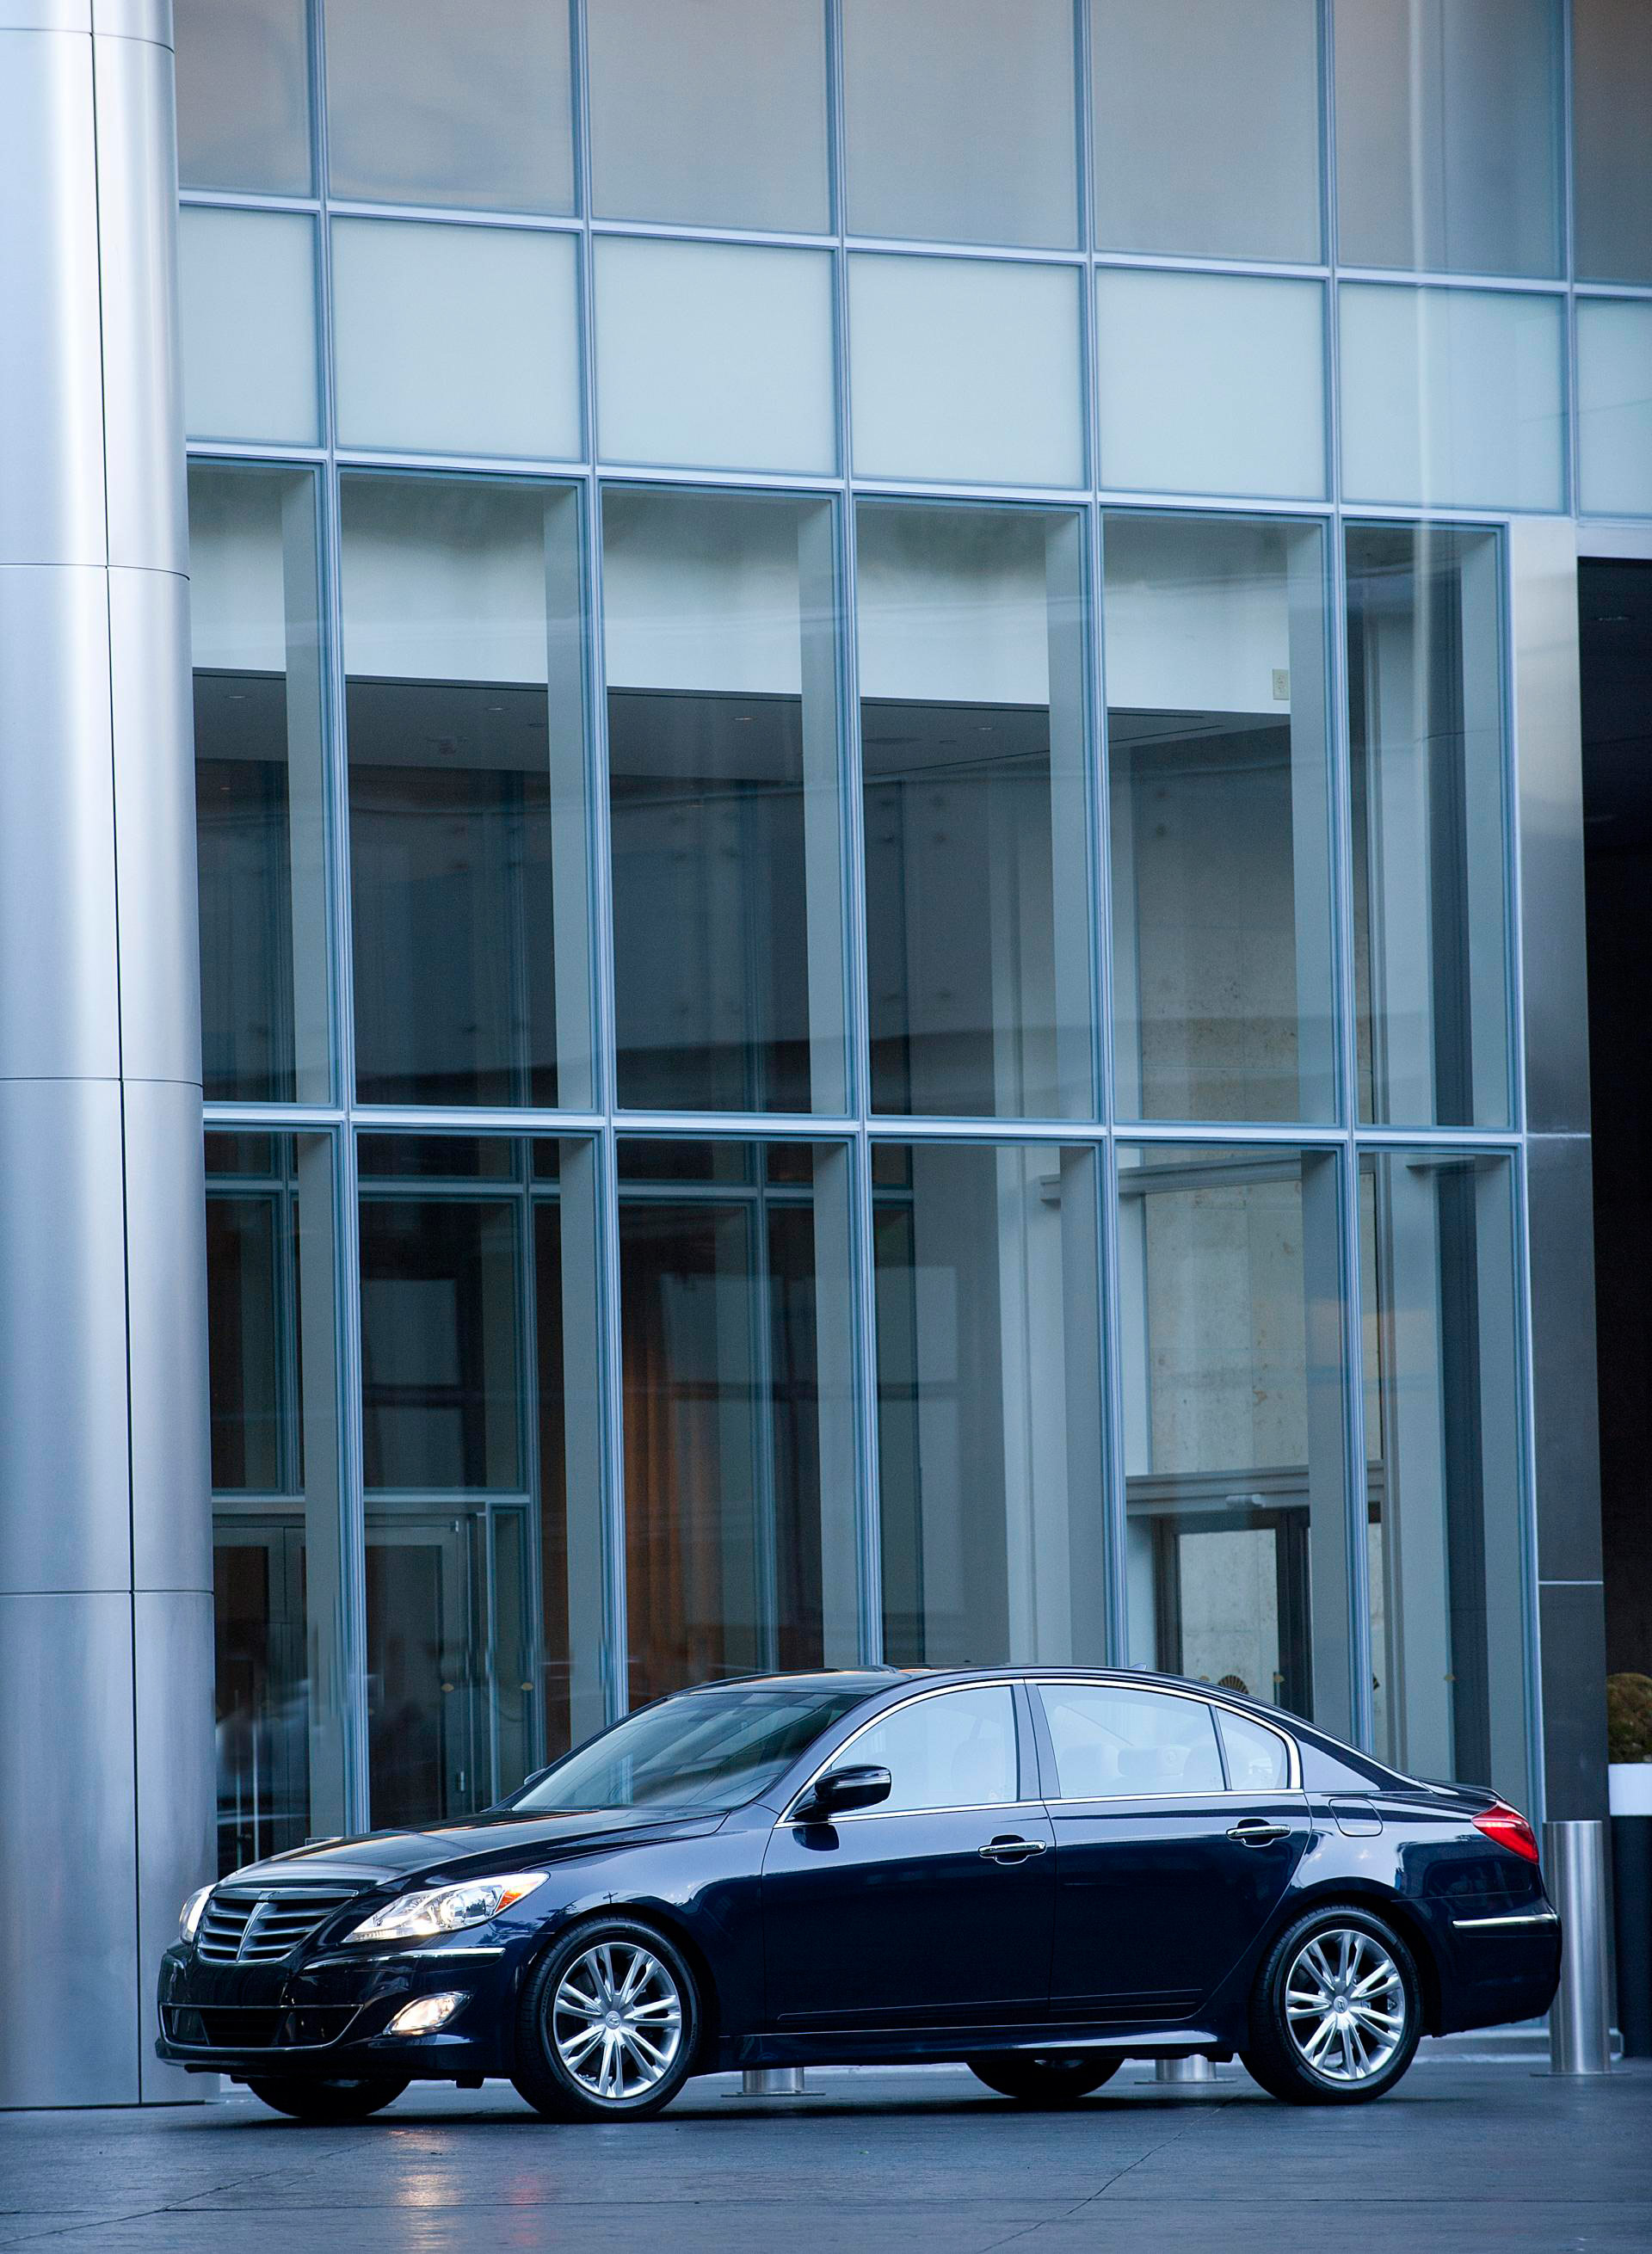 2012 Hyundai Genesis